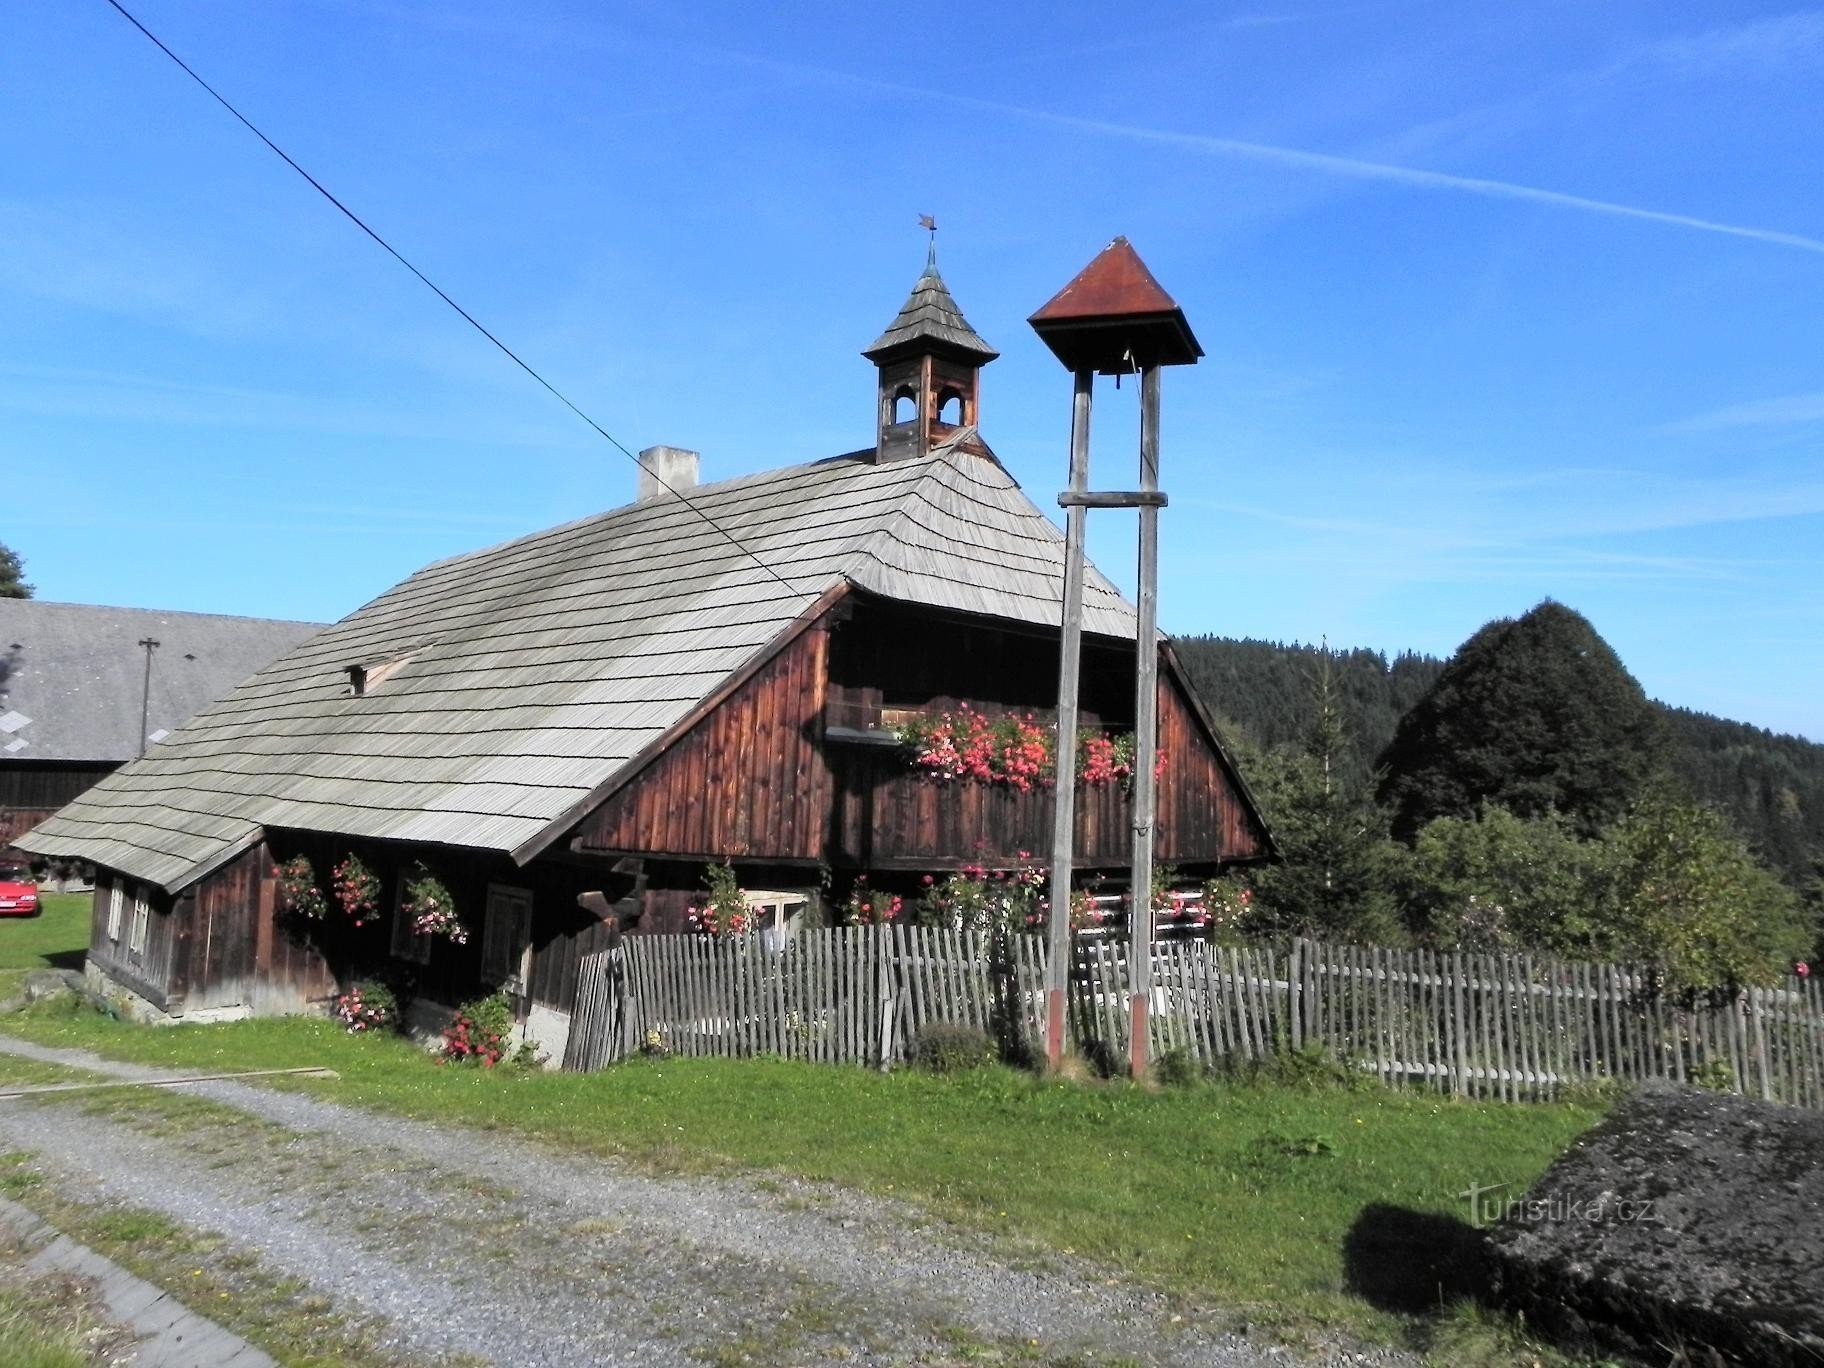 Zvíkov、小木屋和钟楼